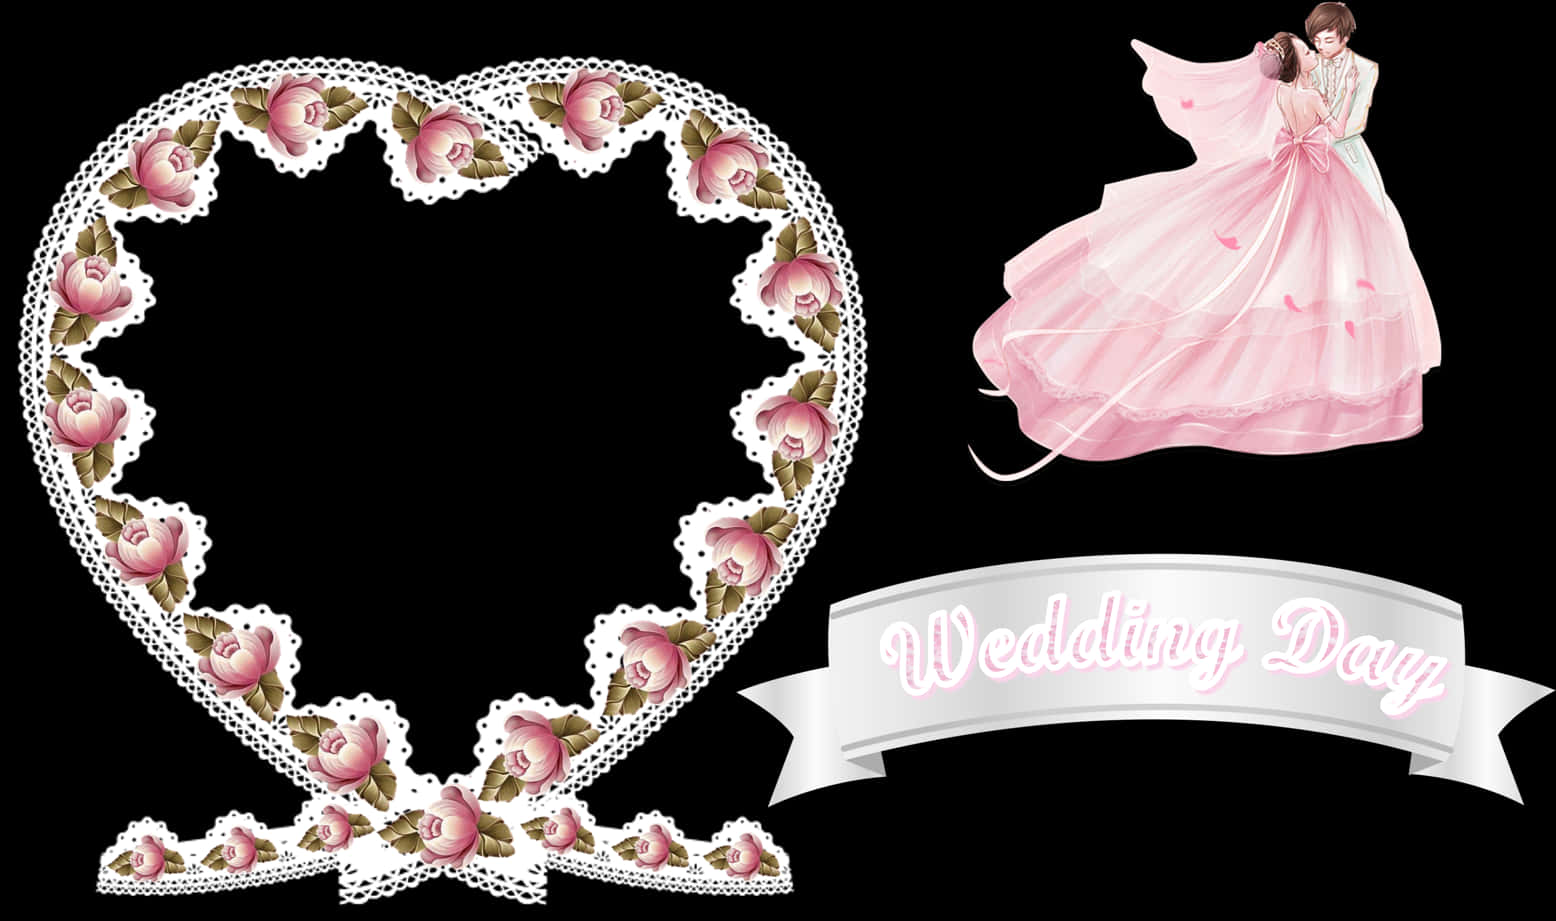 Bridal Gownand Heart Frame Wedding Card Design PNG